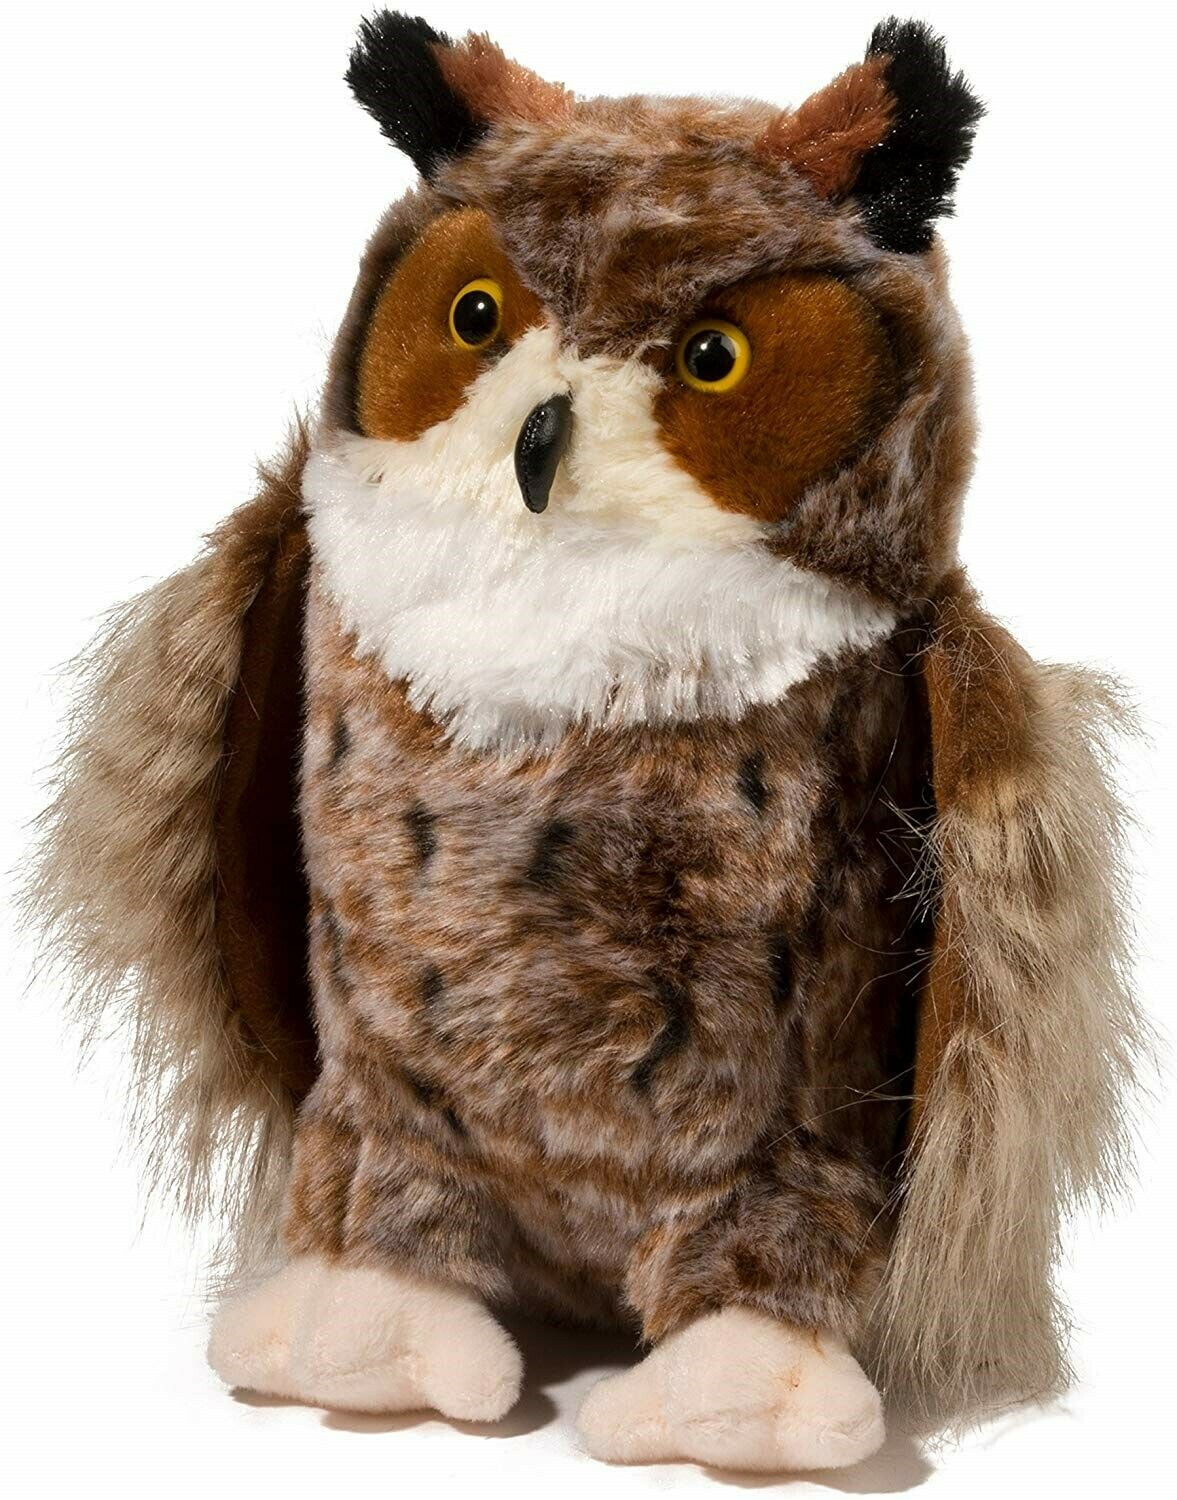 New AURORA MIYONI Stuffed Plush Toy GREAT HORNED BABY OWL Animal Bird GREY GRAY 